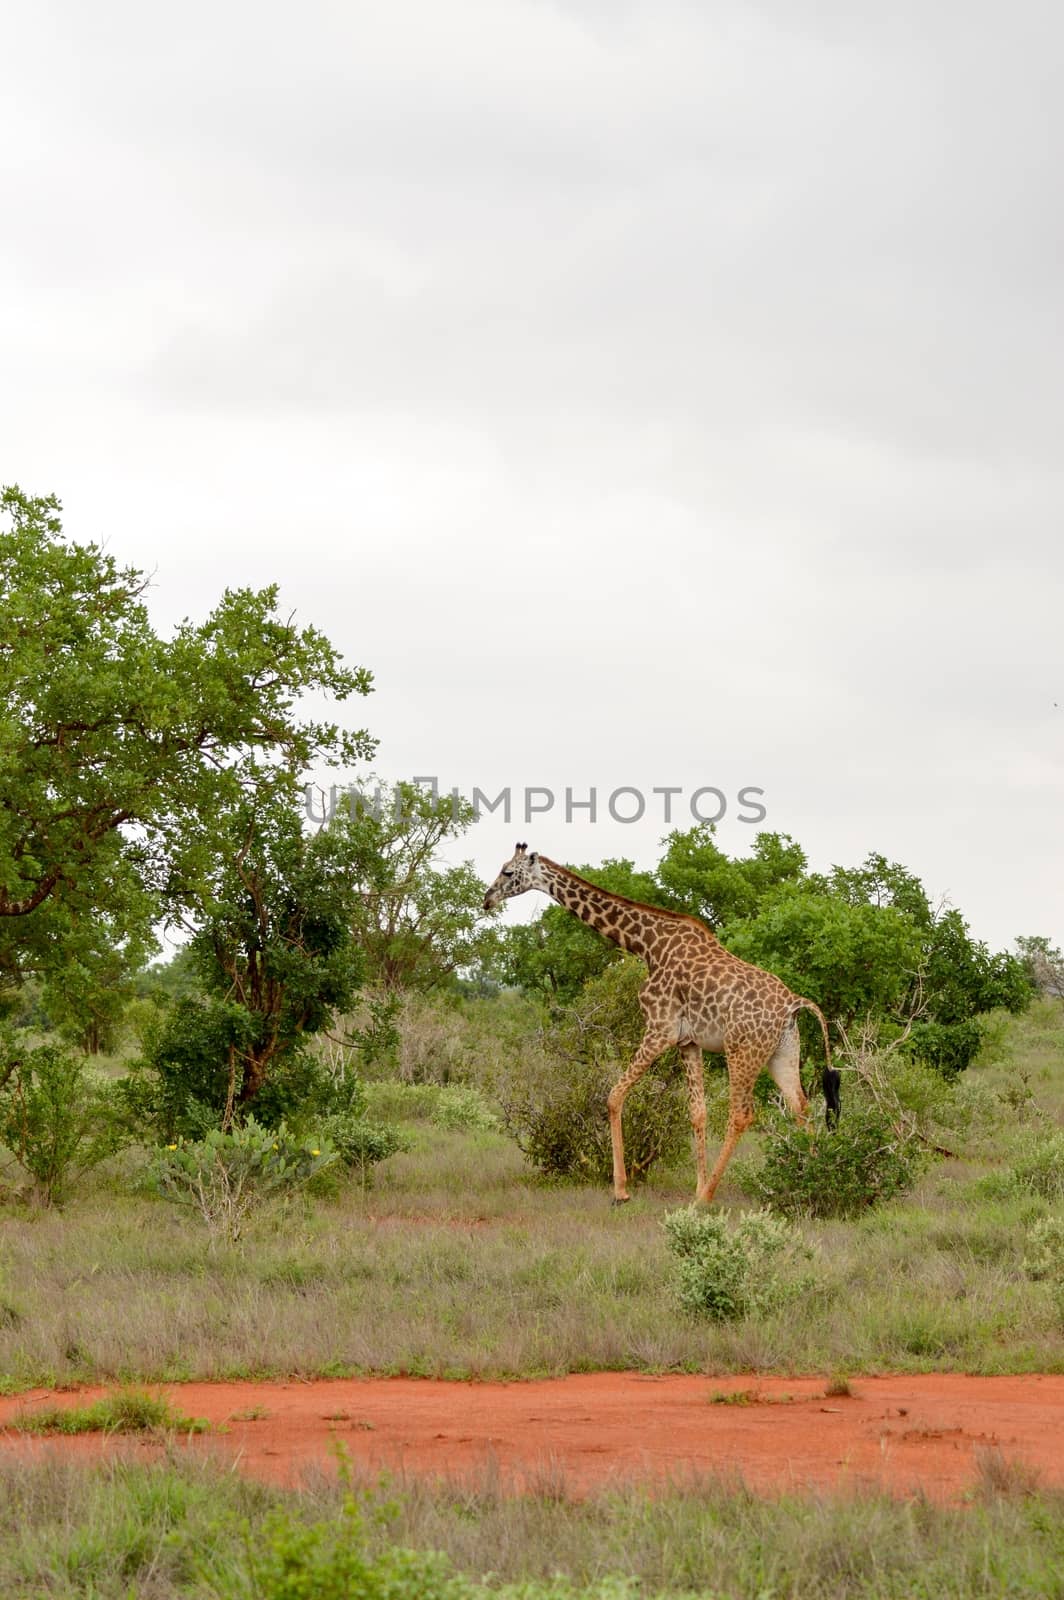 Giraffe in the savanna by Philou1000